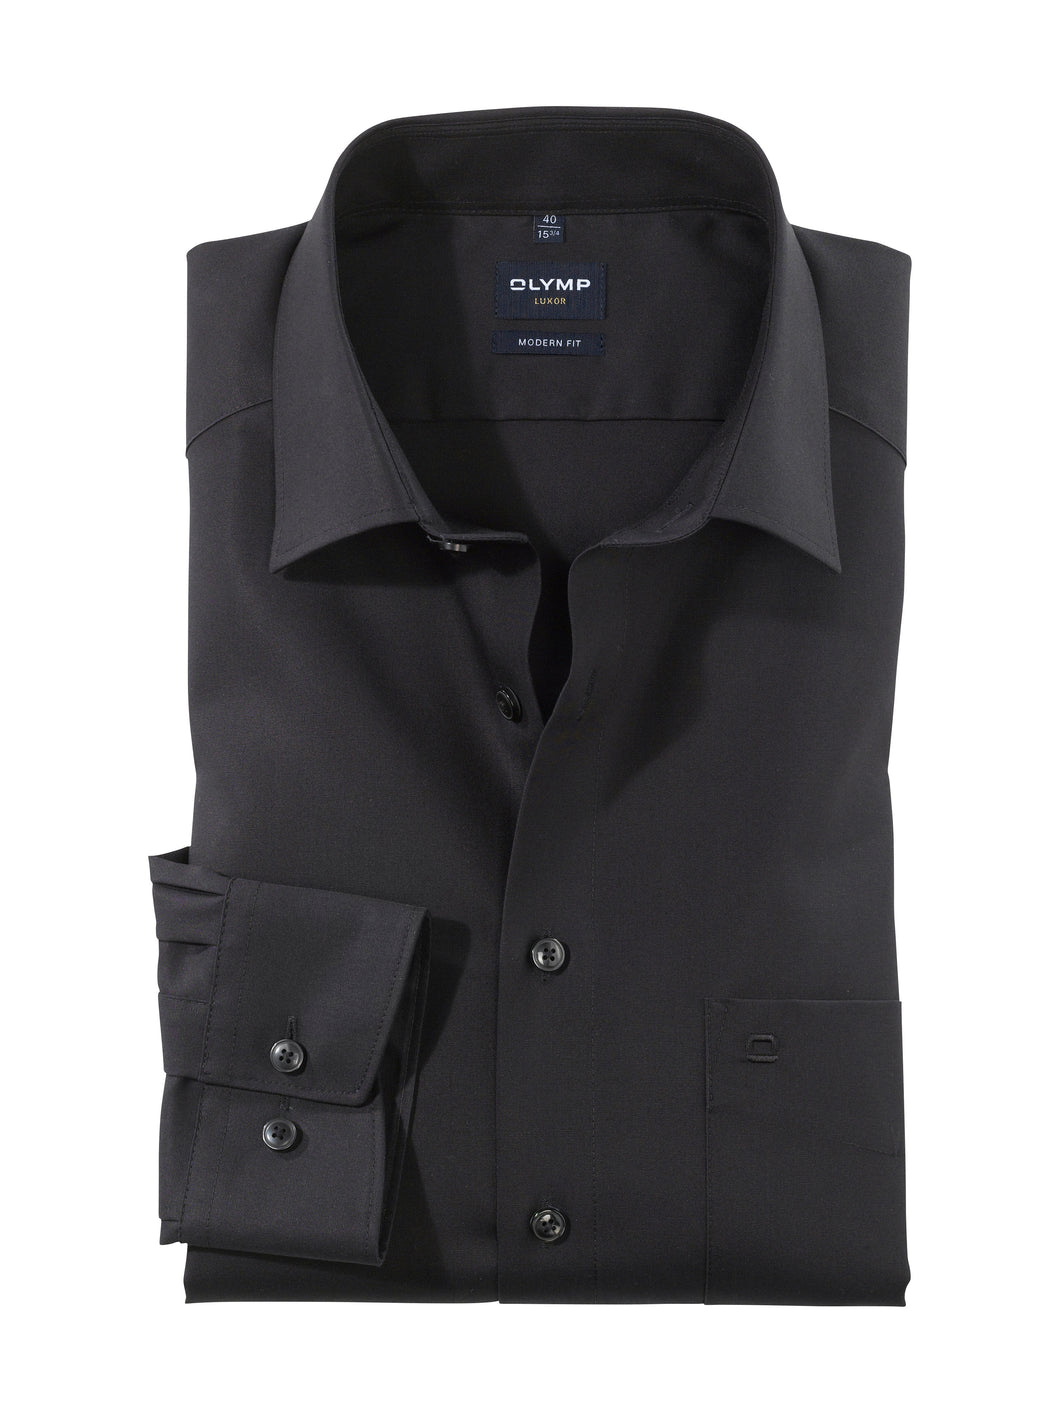 Olymp Luxor Modern Fit Shirt in Black